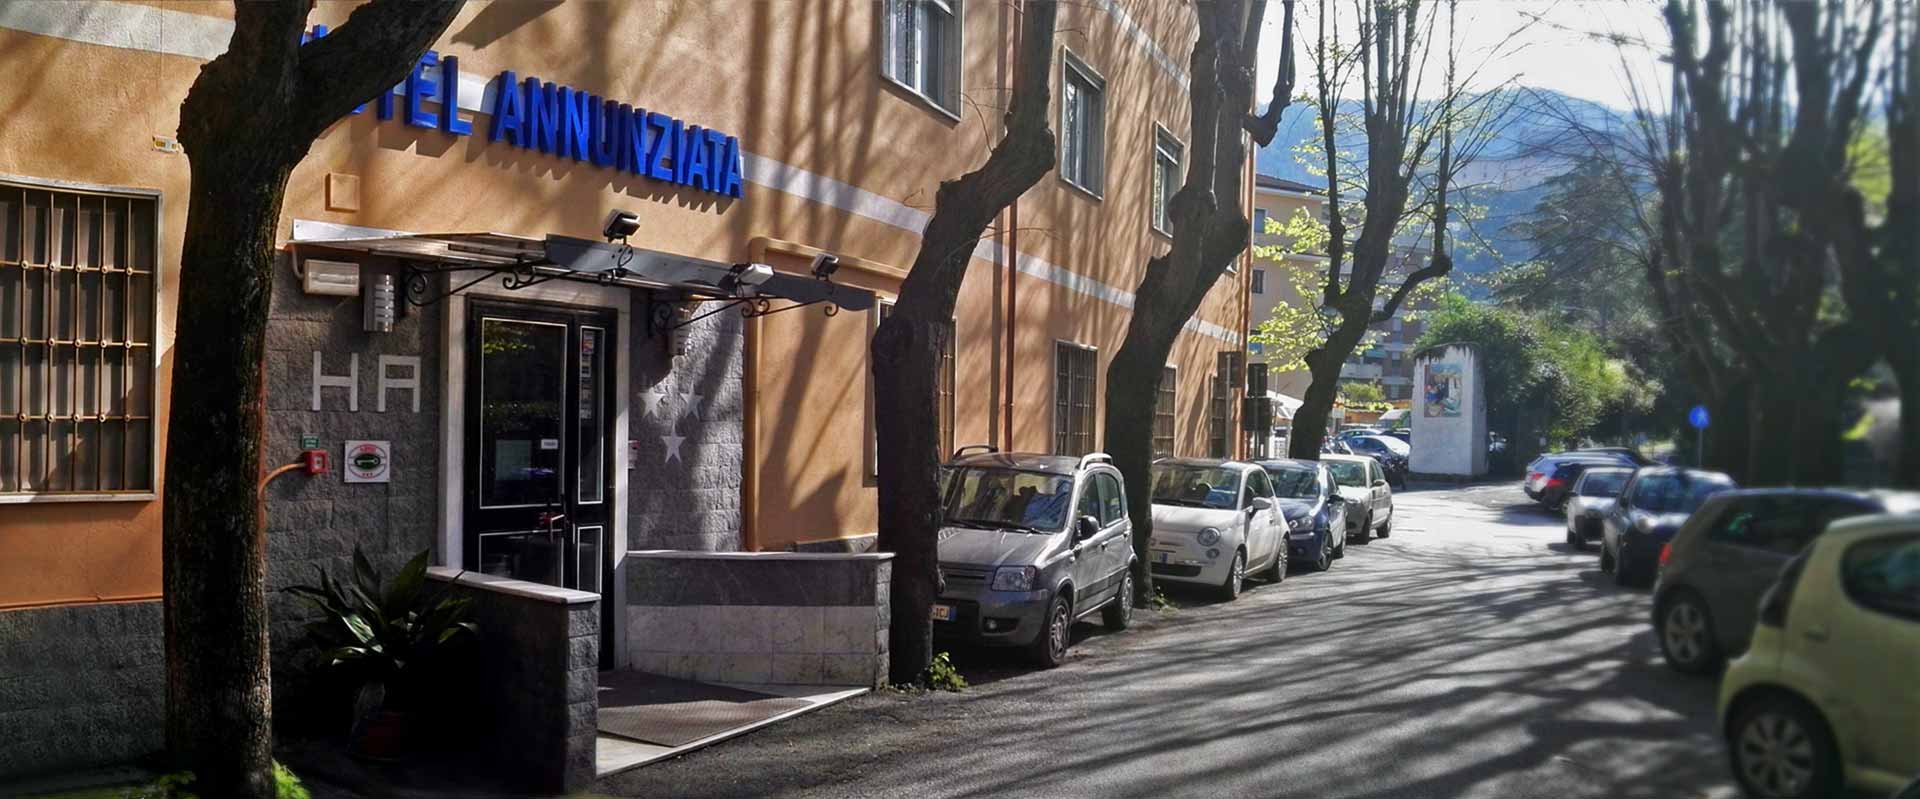 (c) Hotelannunziata.com